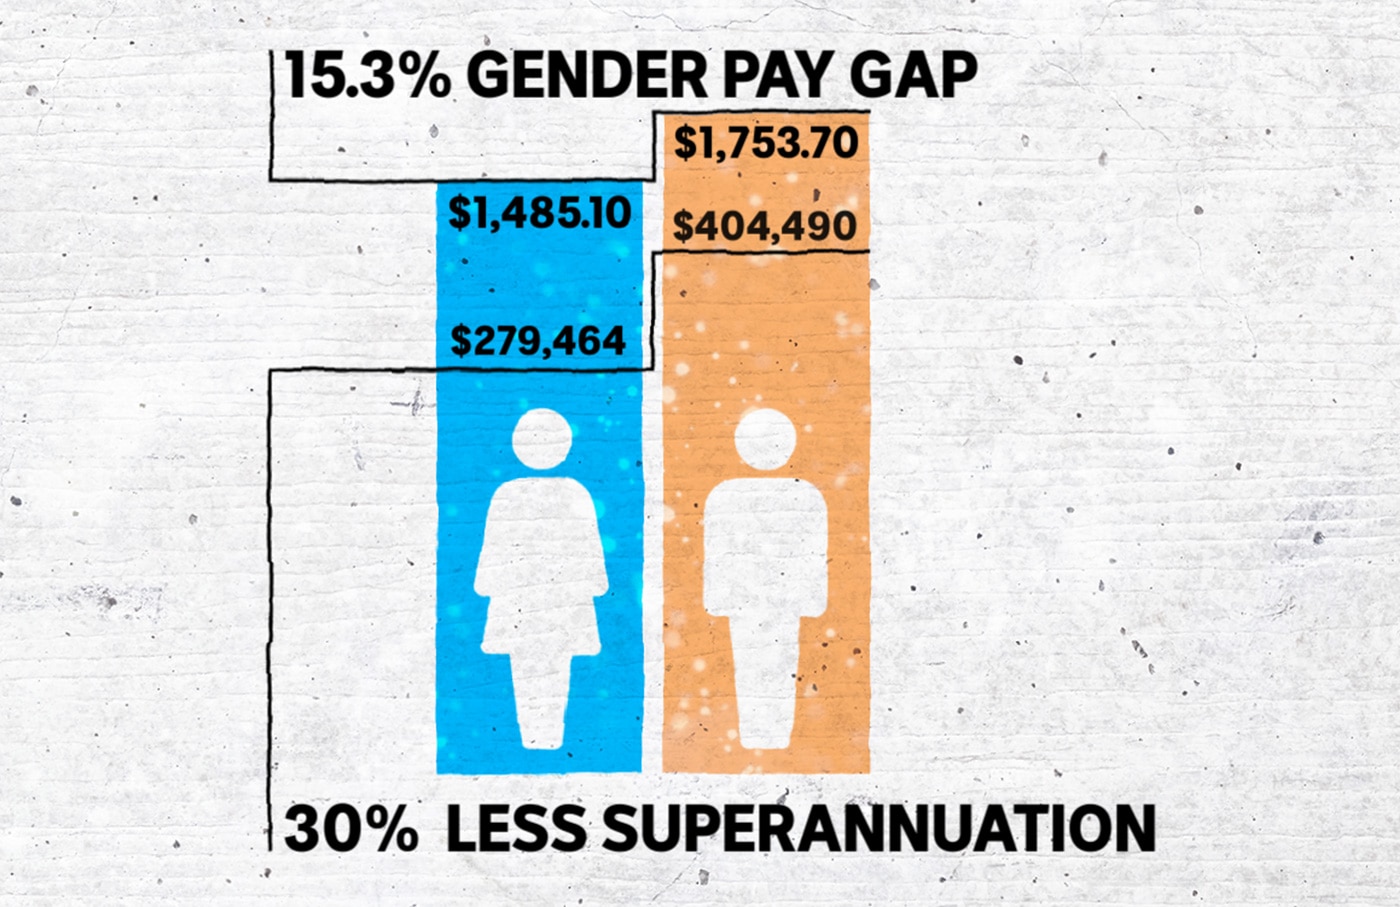 Graphic showing gender pay gap in Queensland.